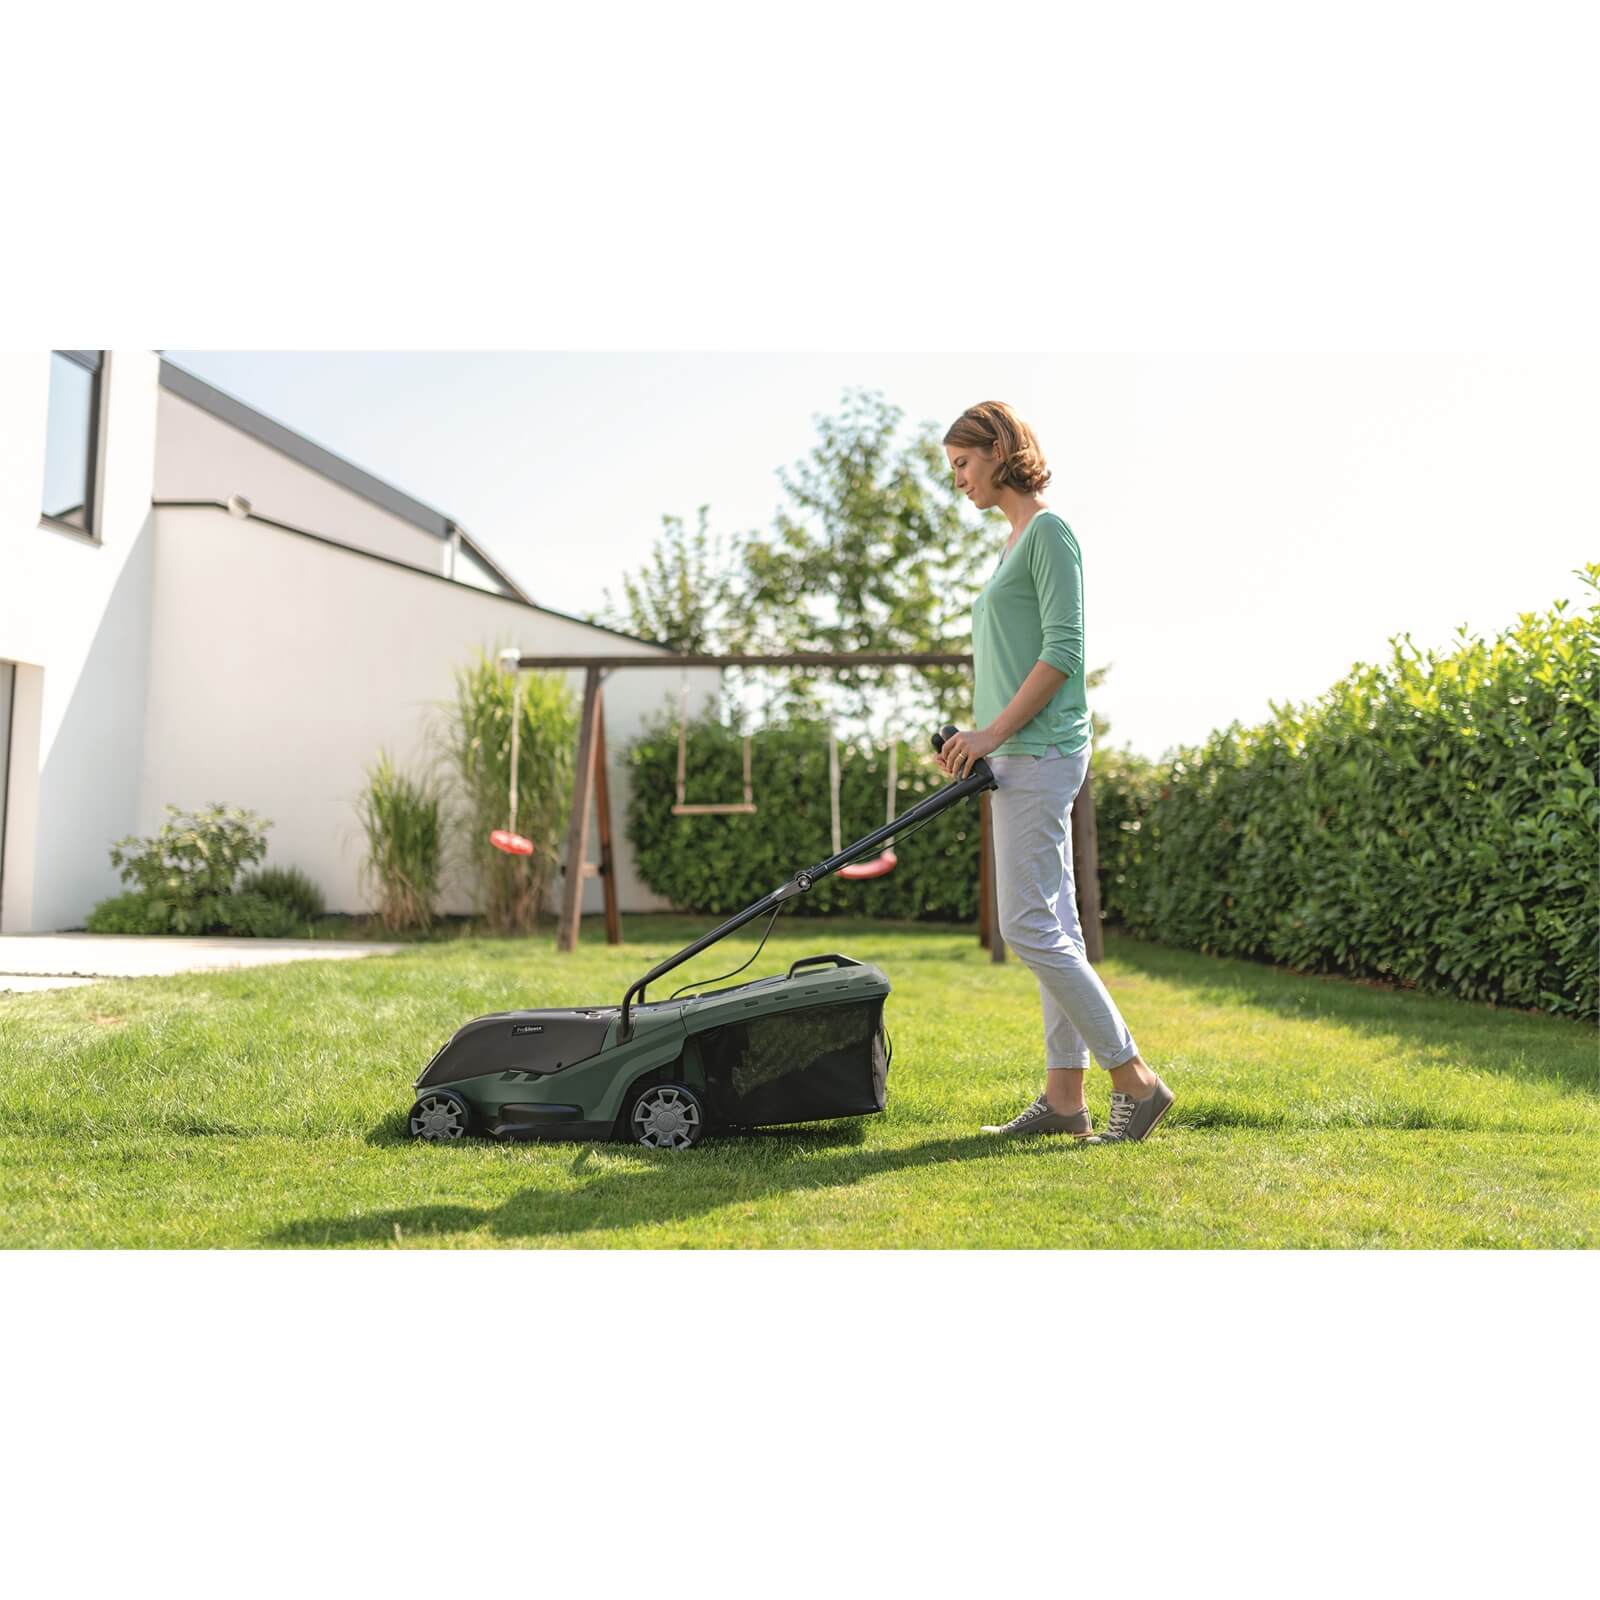 Bosch 36V Universal Rotak 36-550 Cordless Lawn Mower - 36cm